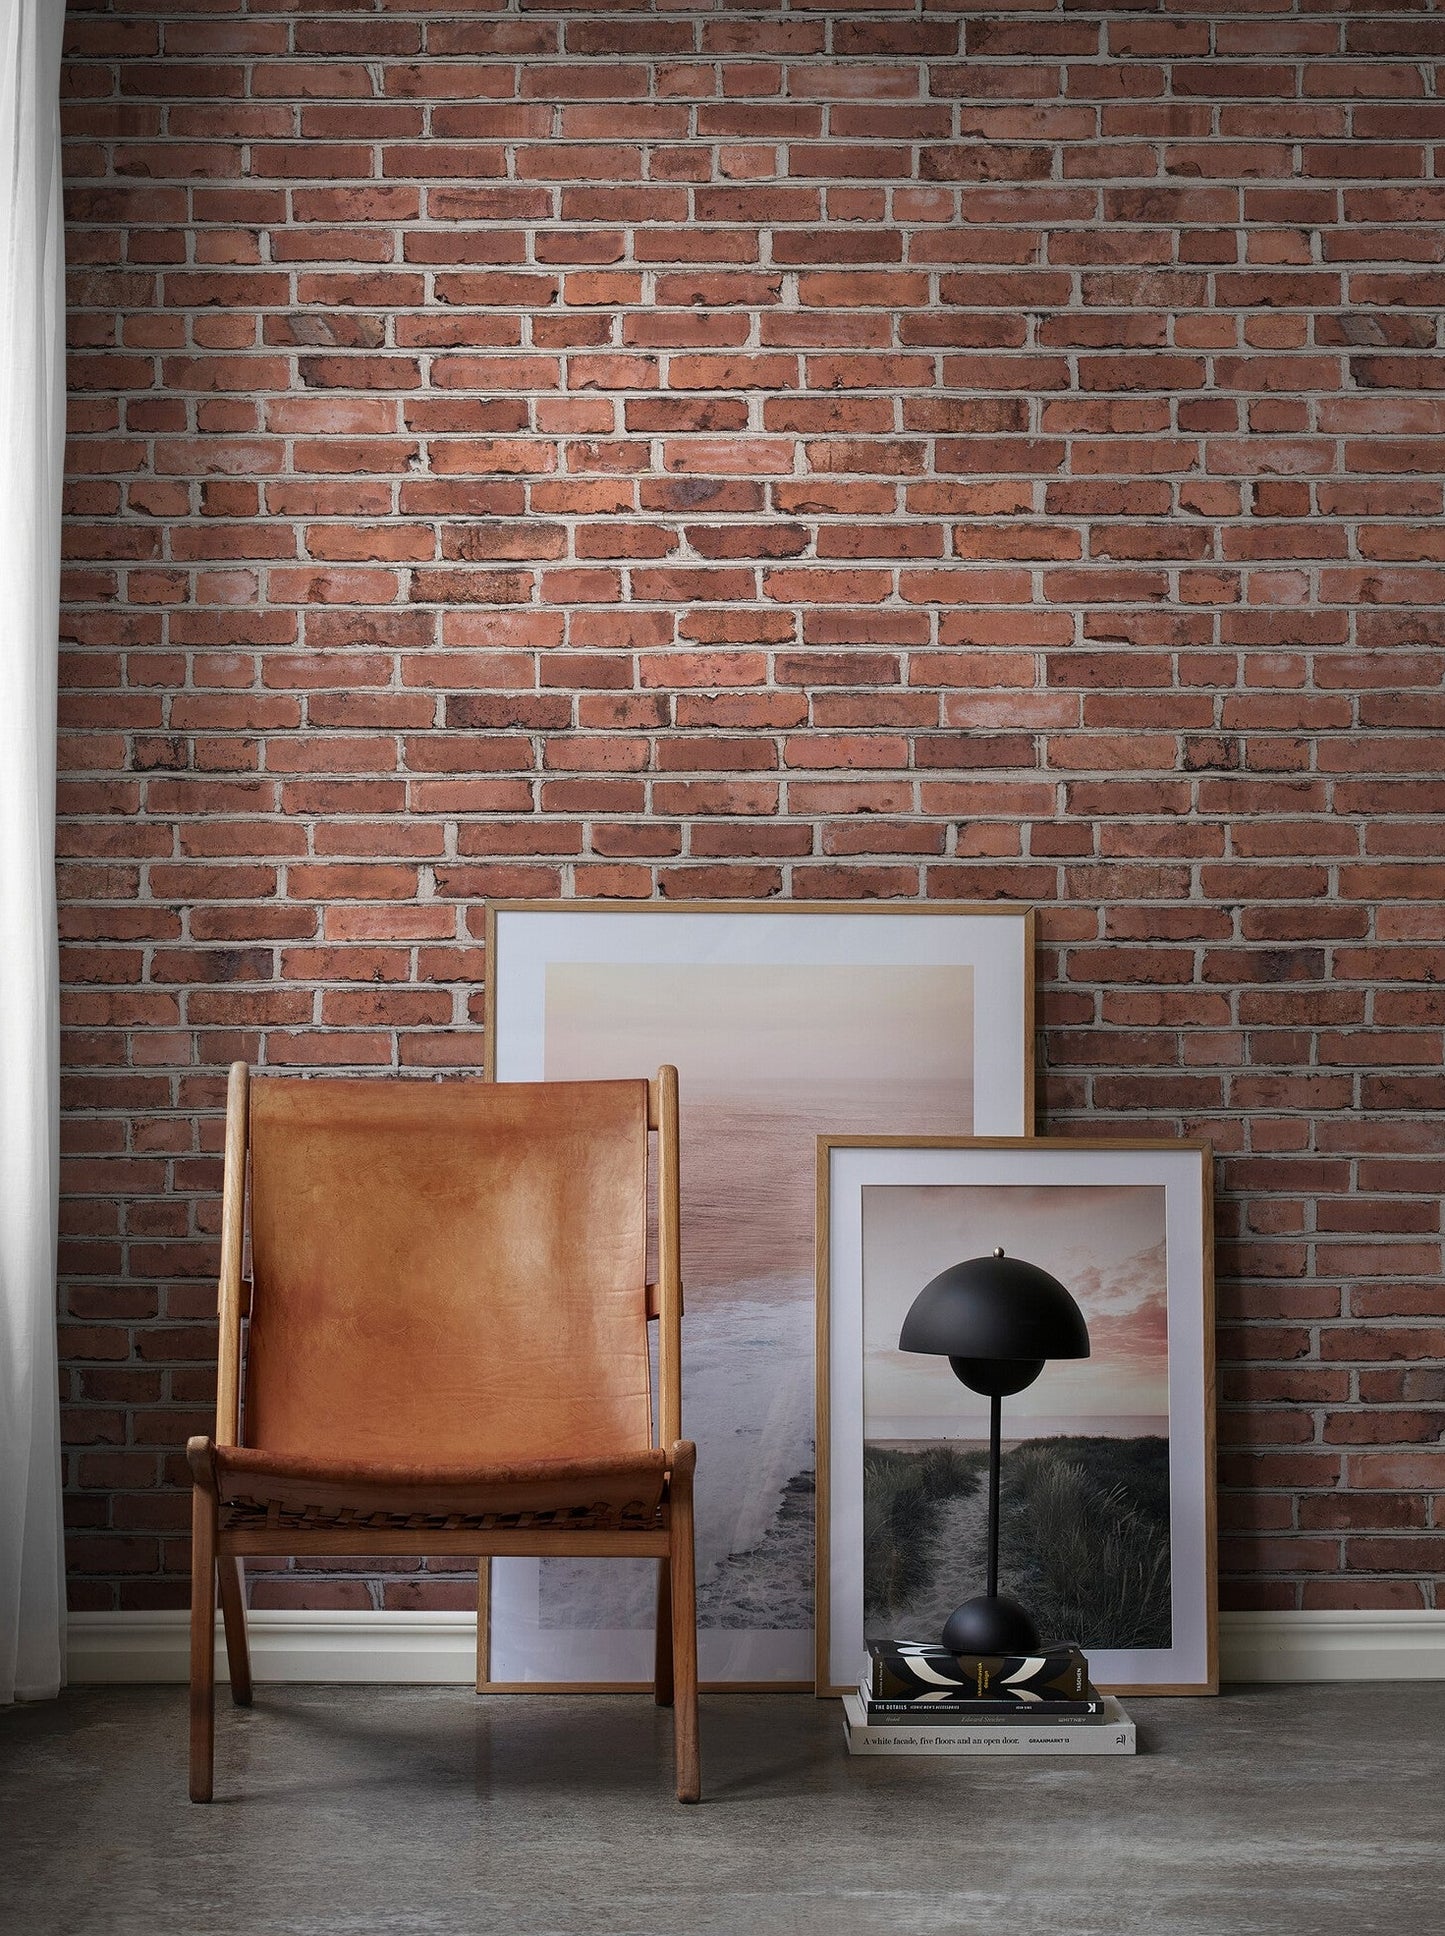 Realistic Brick Wall - 9446W